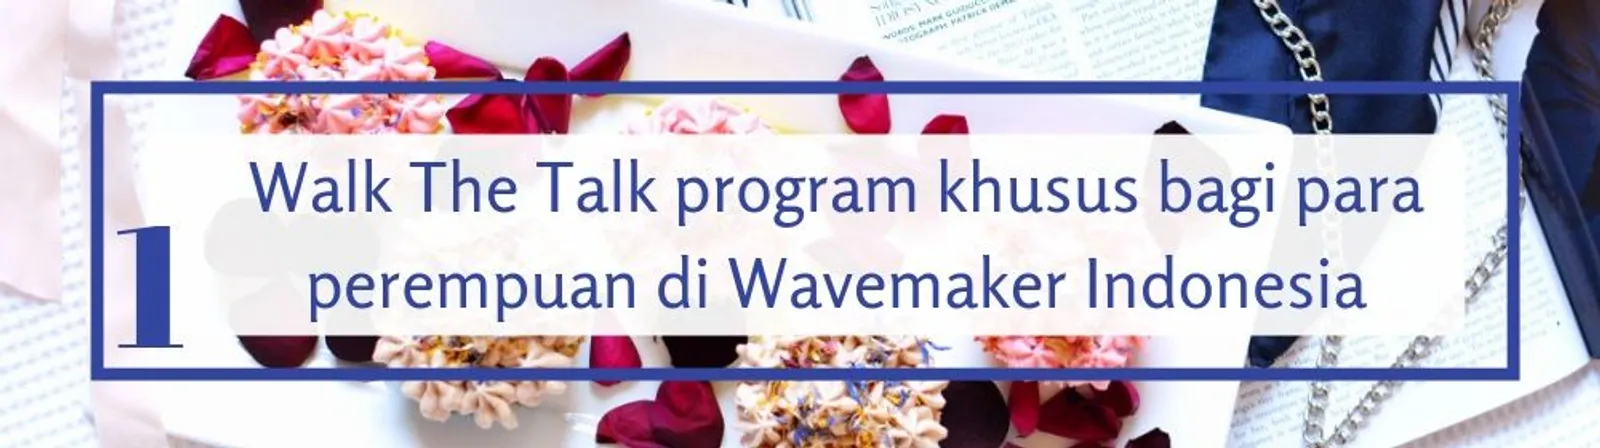 Walk The Talk, Program Inspiratif bagi Perempuan Modern